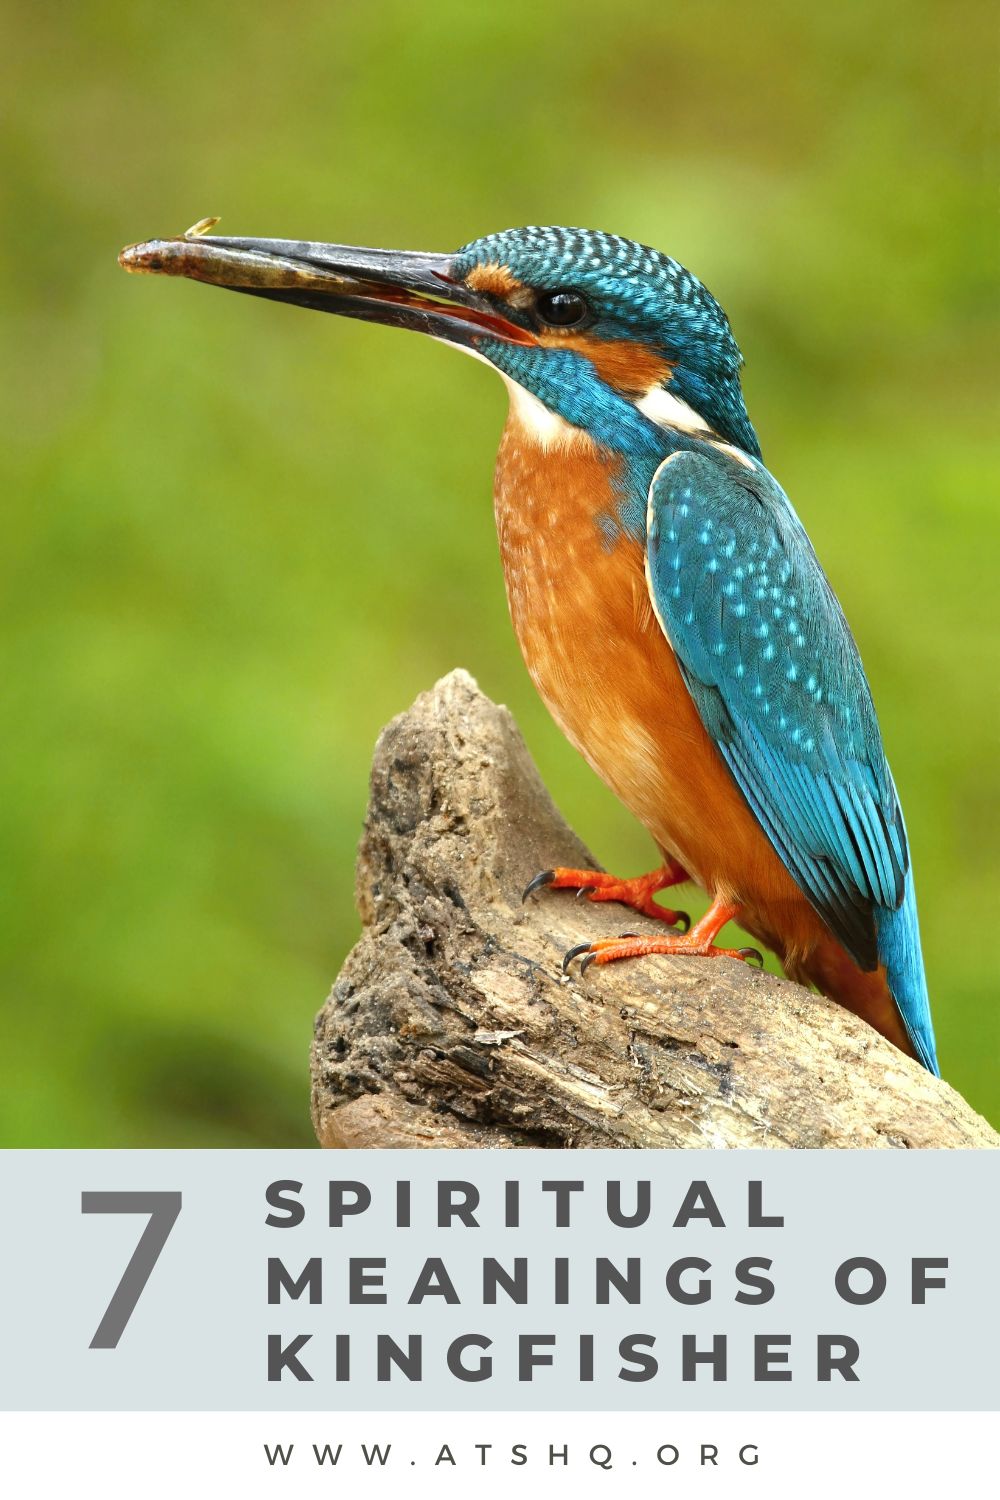 Kingfisher Symbolism: 7 Spiritual Meanings of Kingfisher